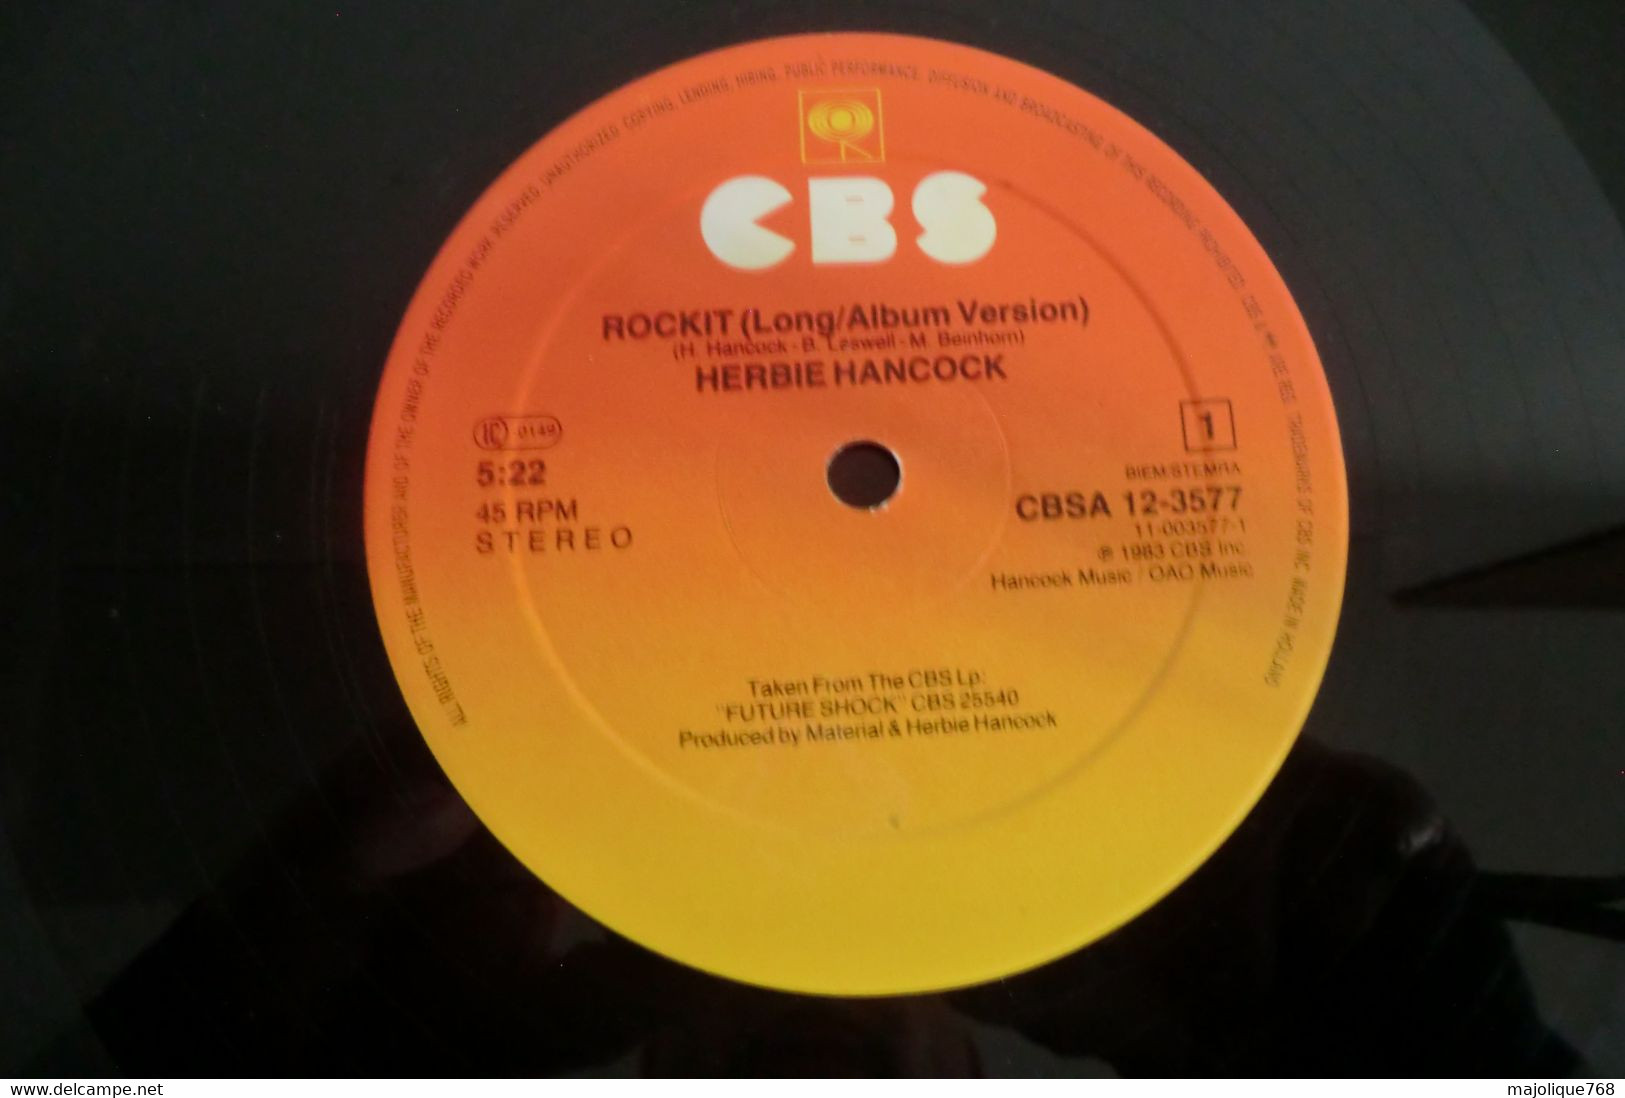 Disque De Herbie Hancock - Rock It - 45 RPM 12 Inch MAXI Single - CBS A - 12.3577 - Stereo  Sortie:  Holland 1983 - Rap & Hip Hop